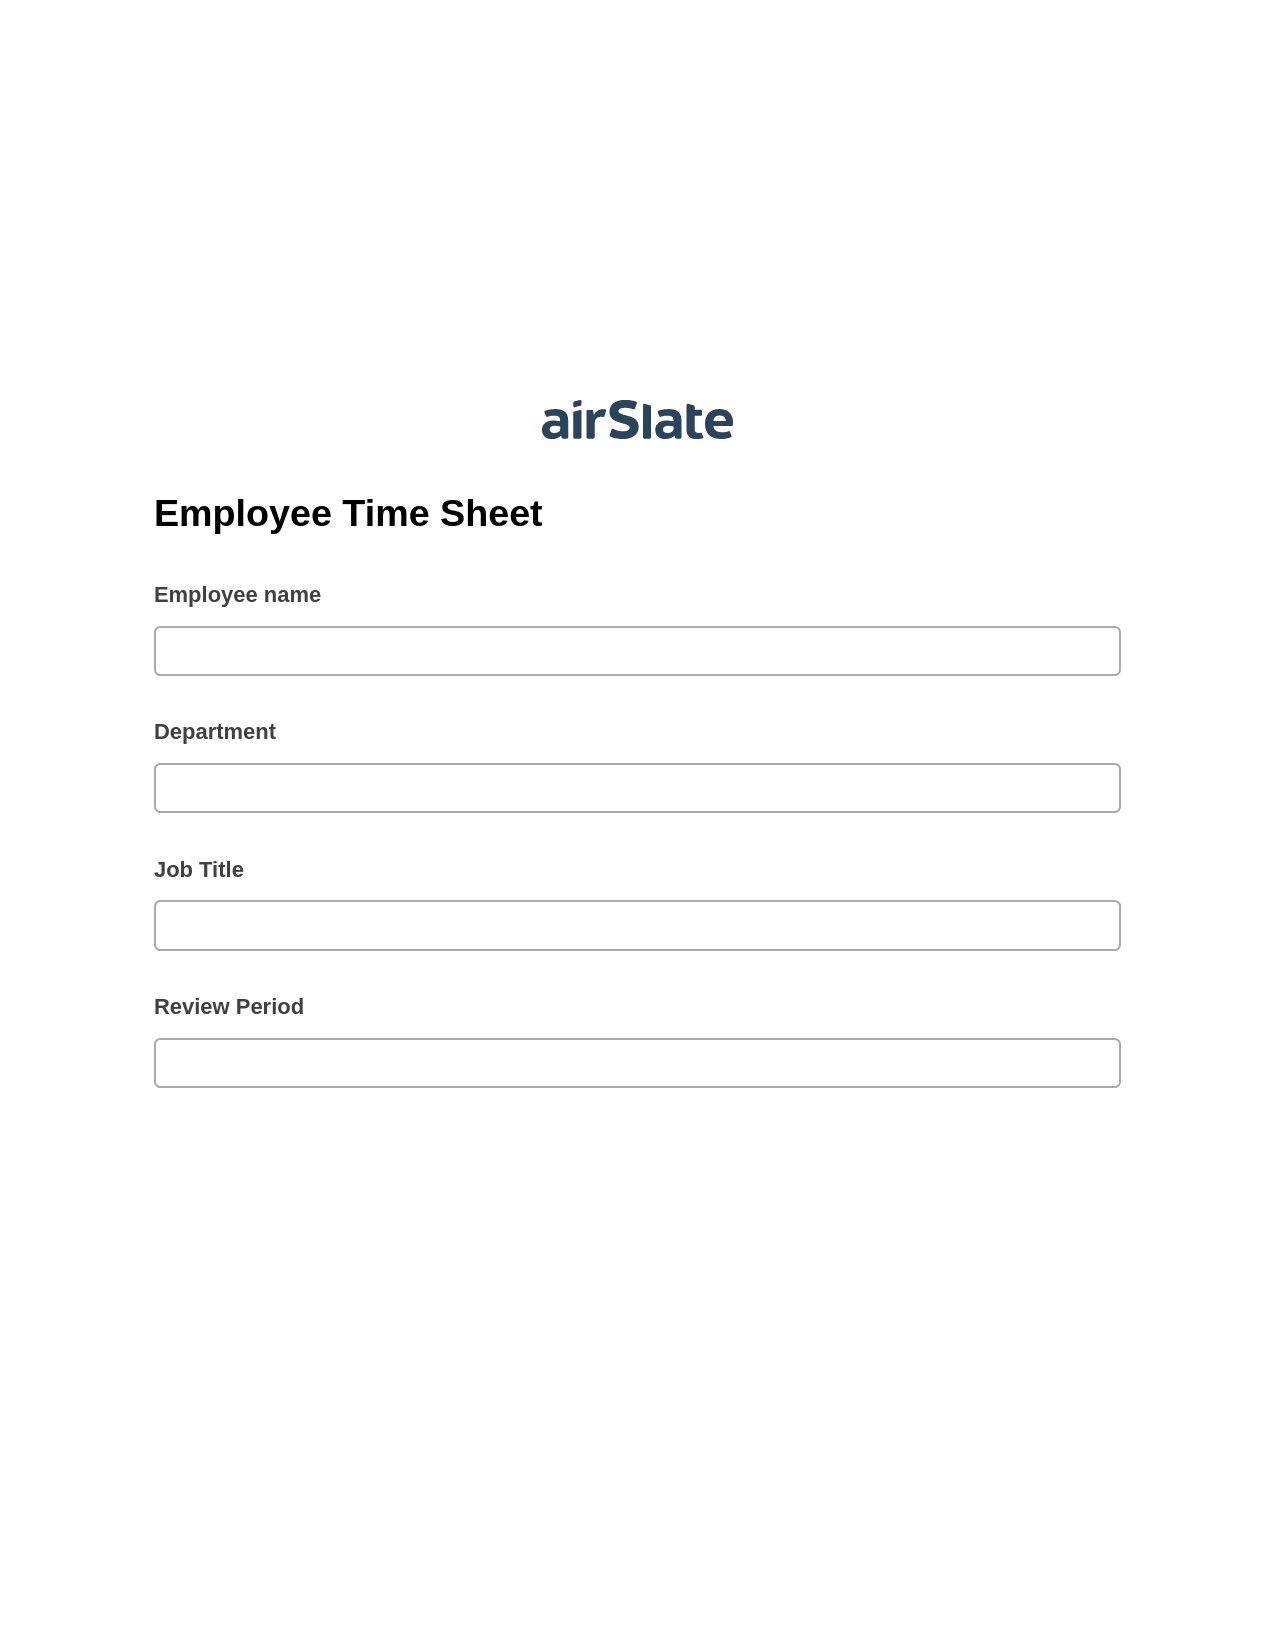 Multirole Employee Time Sheet Pre-fill from Google Sheets Bot, Slack Notification Bot, Archive to OneDrive Bot